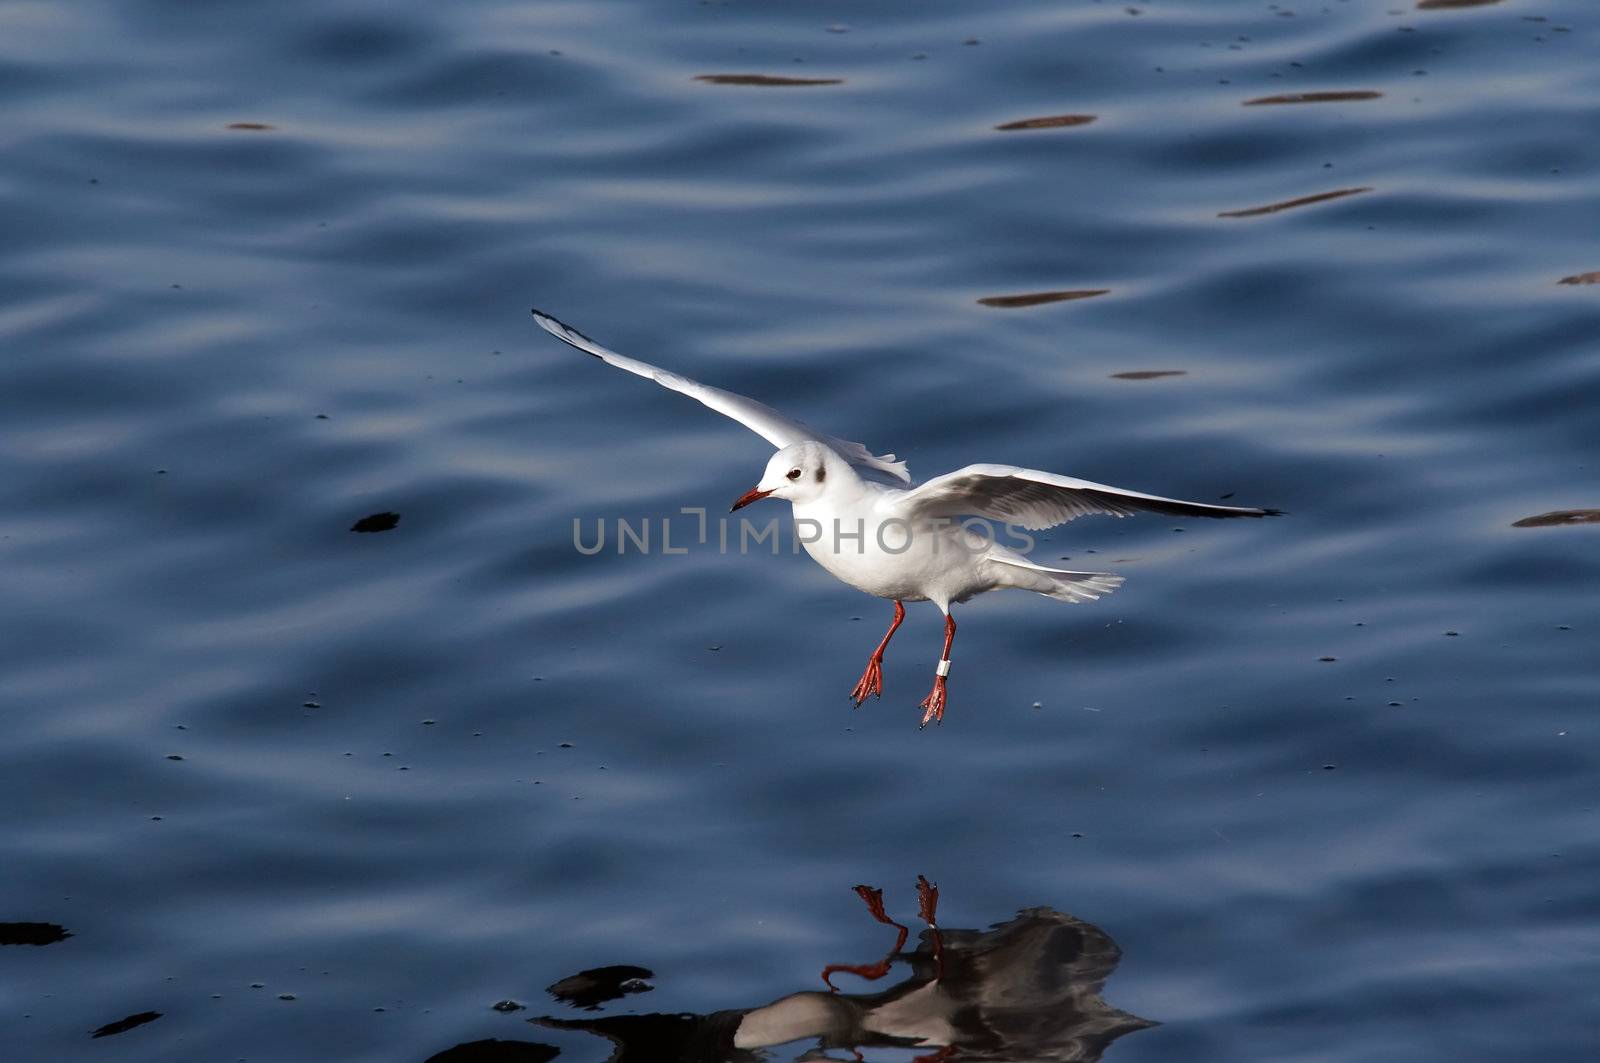 flying gull - splashdown by Mibuch